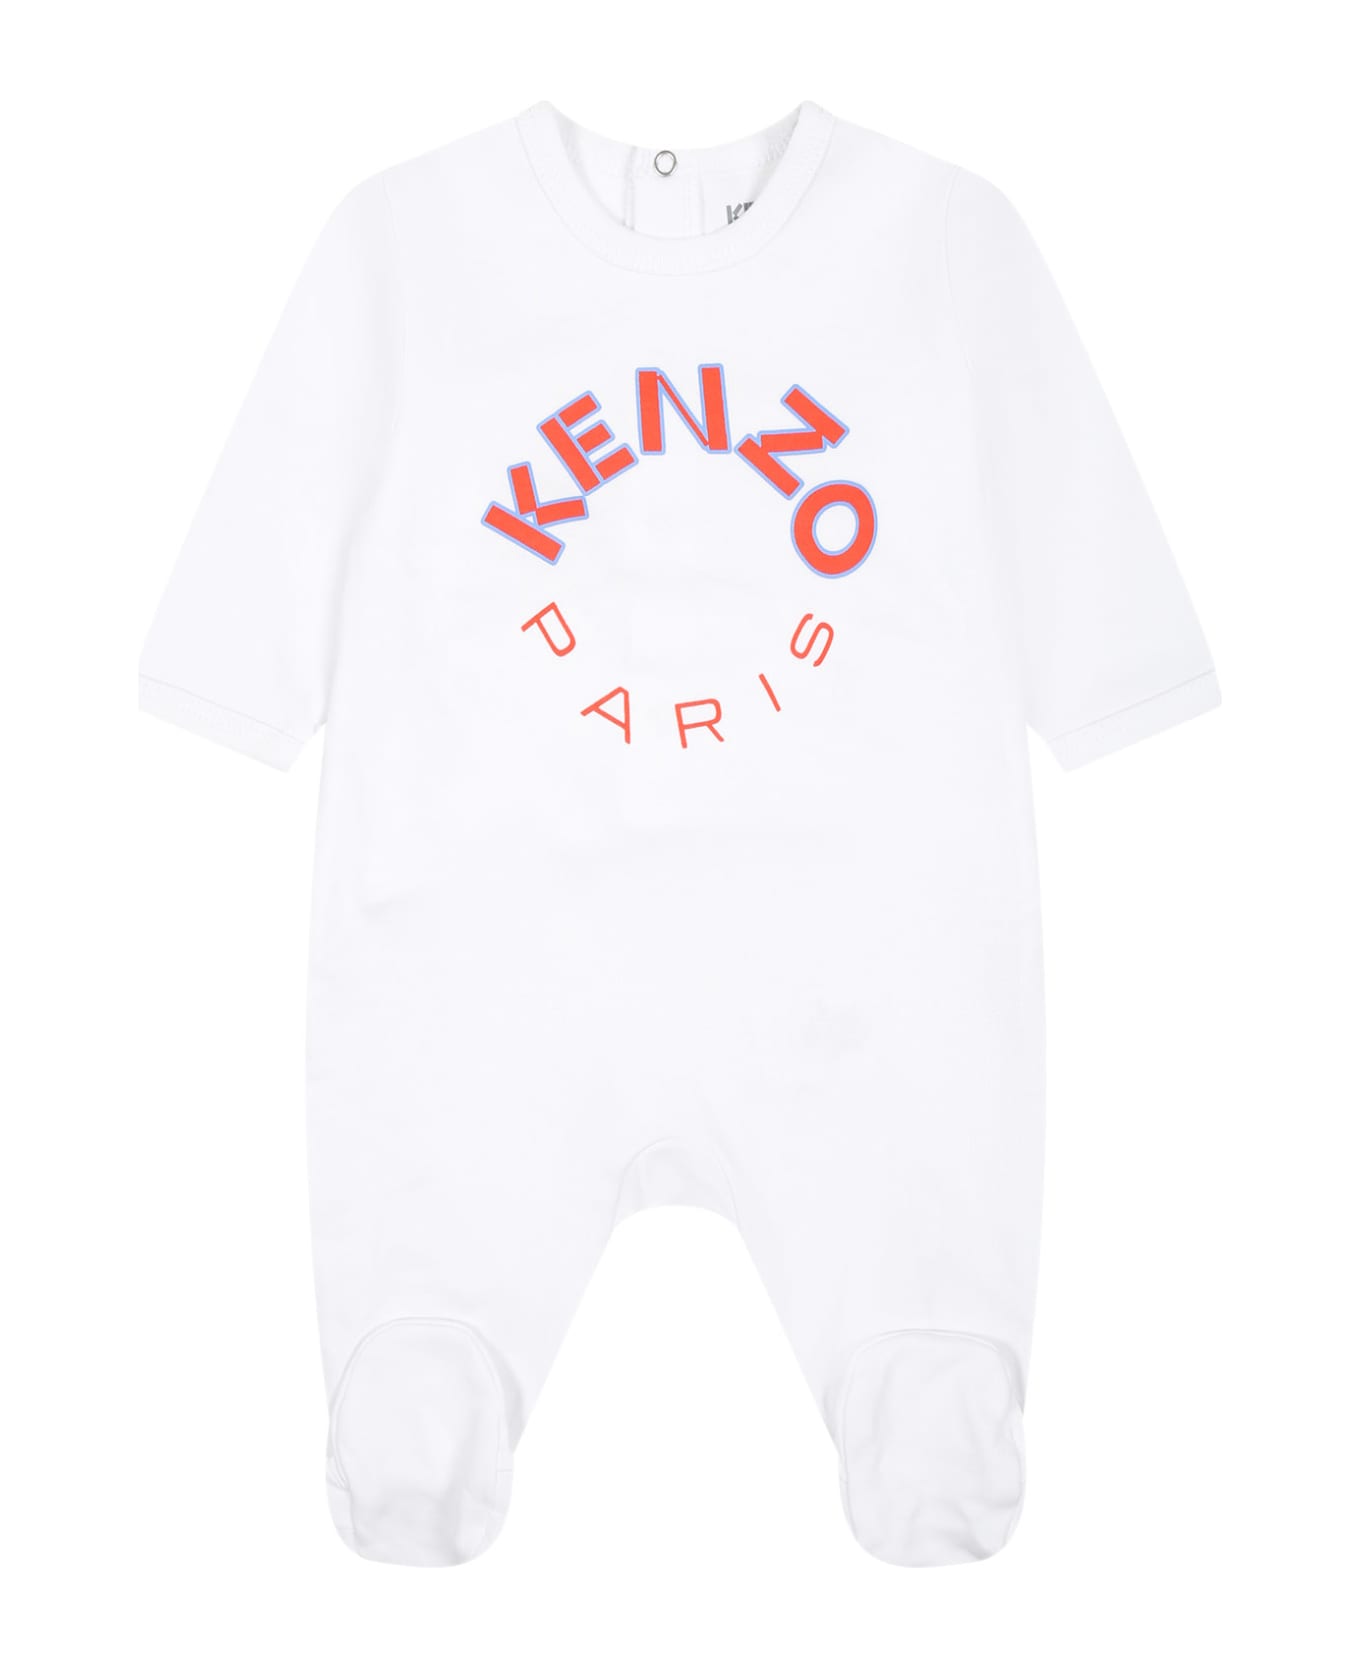 Kenzo Kids Multicolor Babygrows Set For Baby Boy With Logo - Multicolor